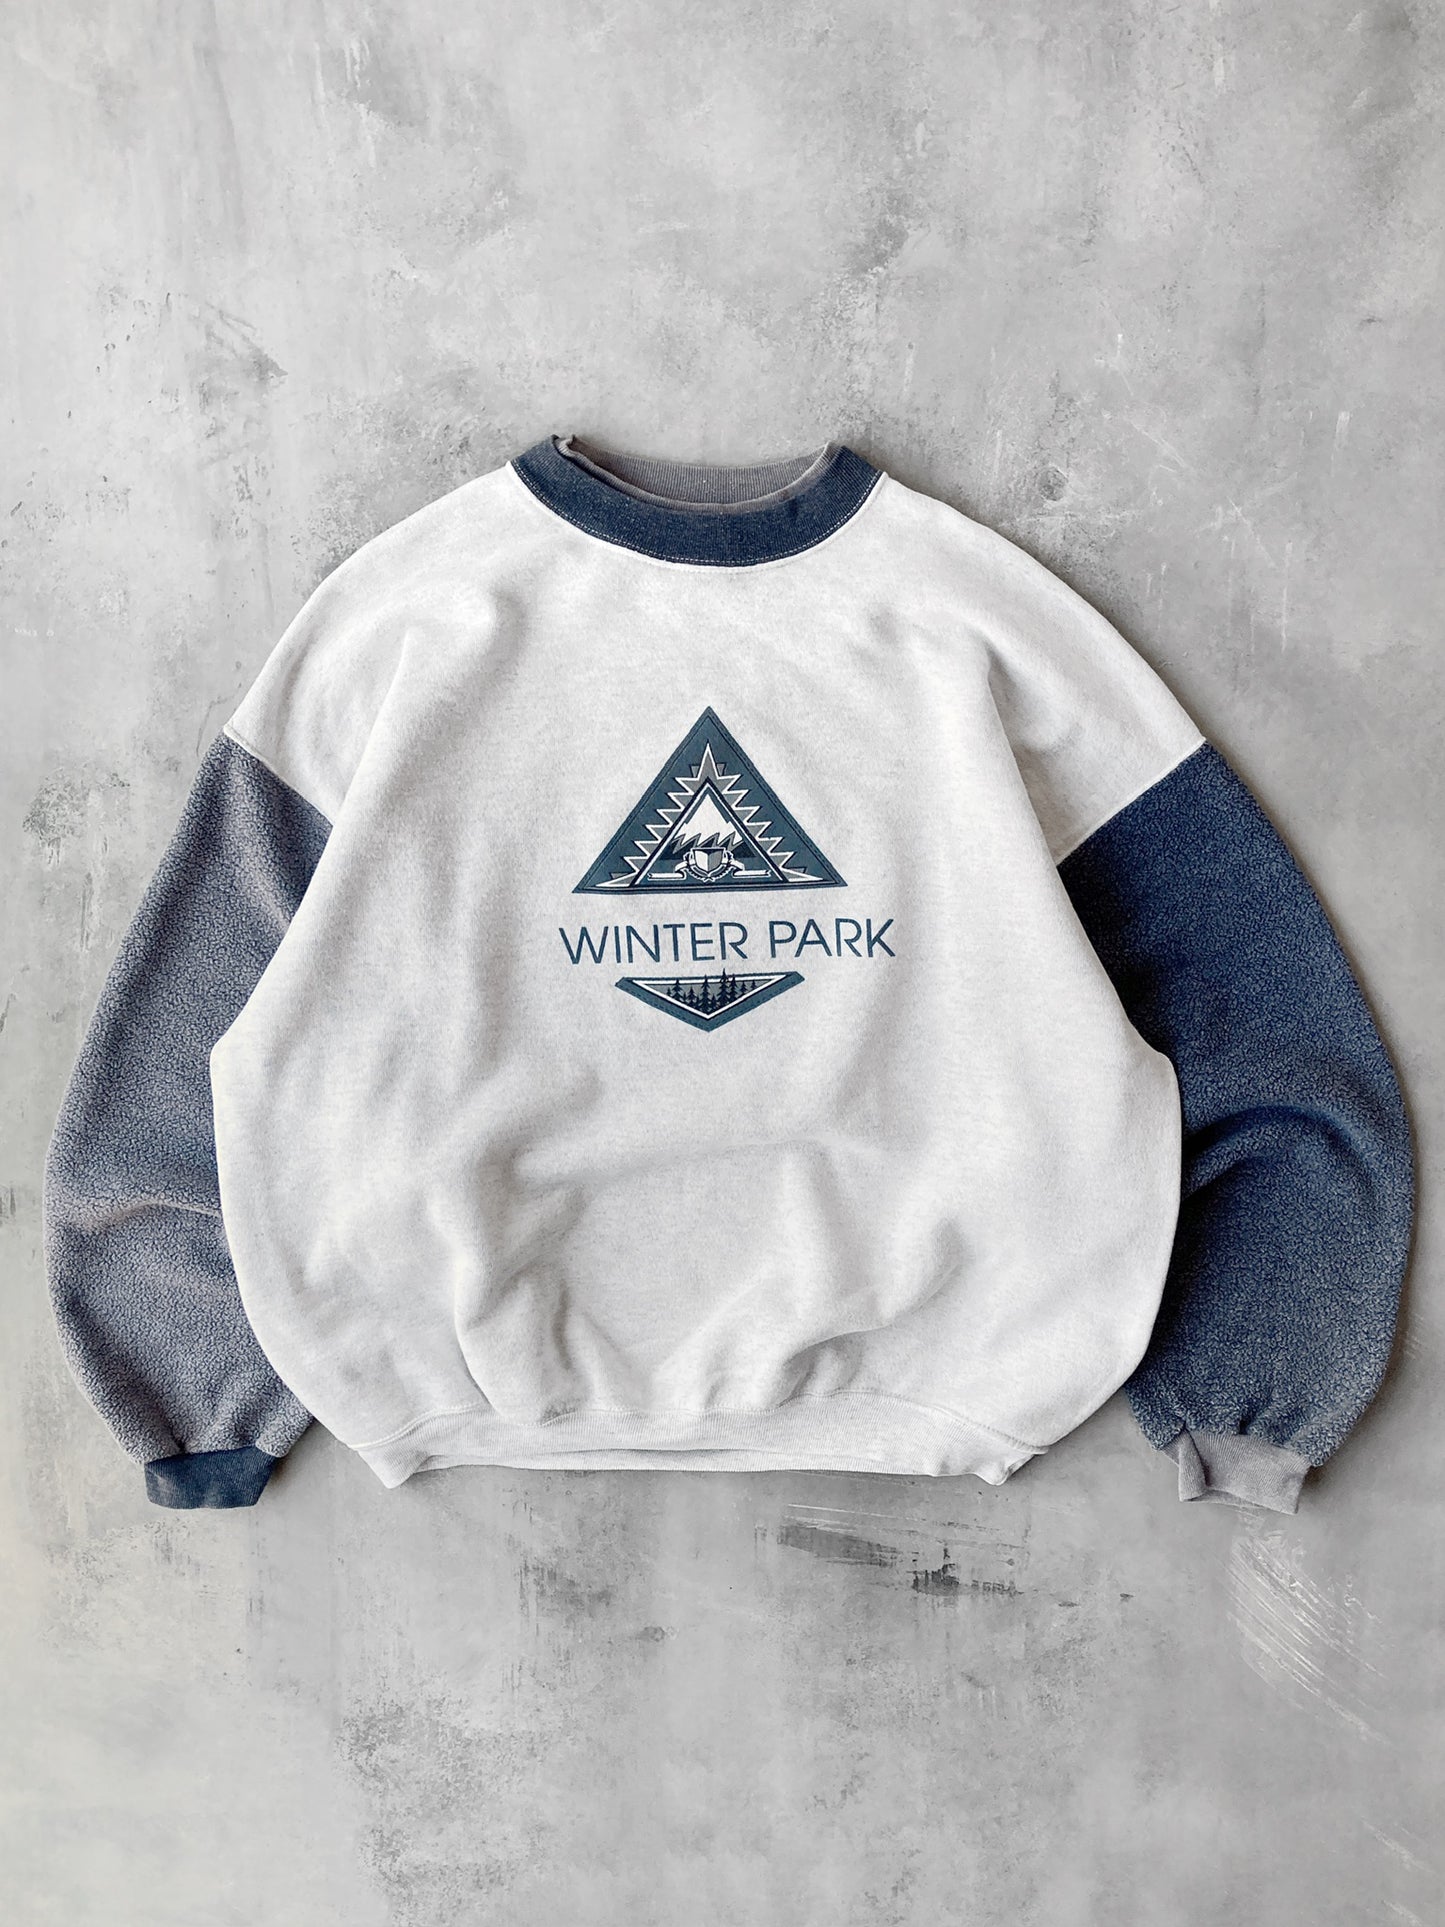 Winter Park Sweatshirt 90's - Large / XL